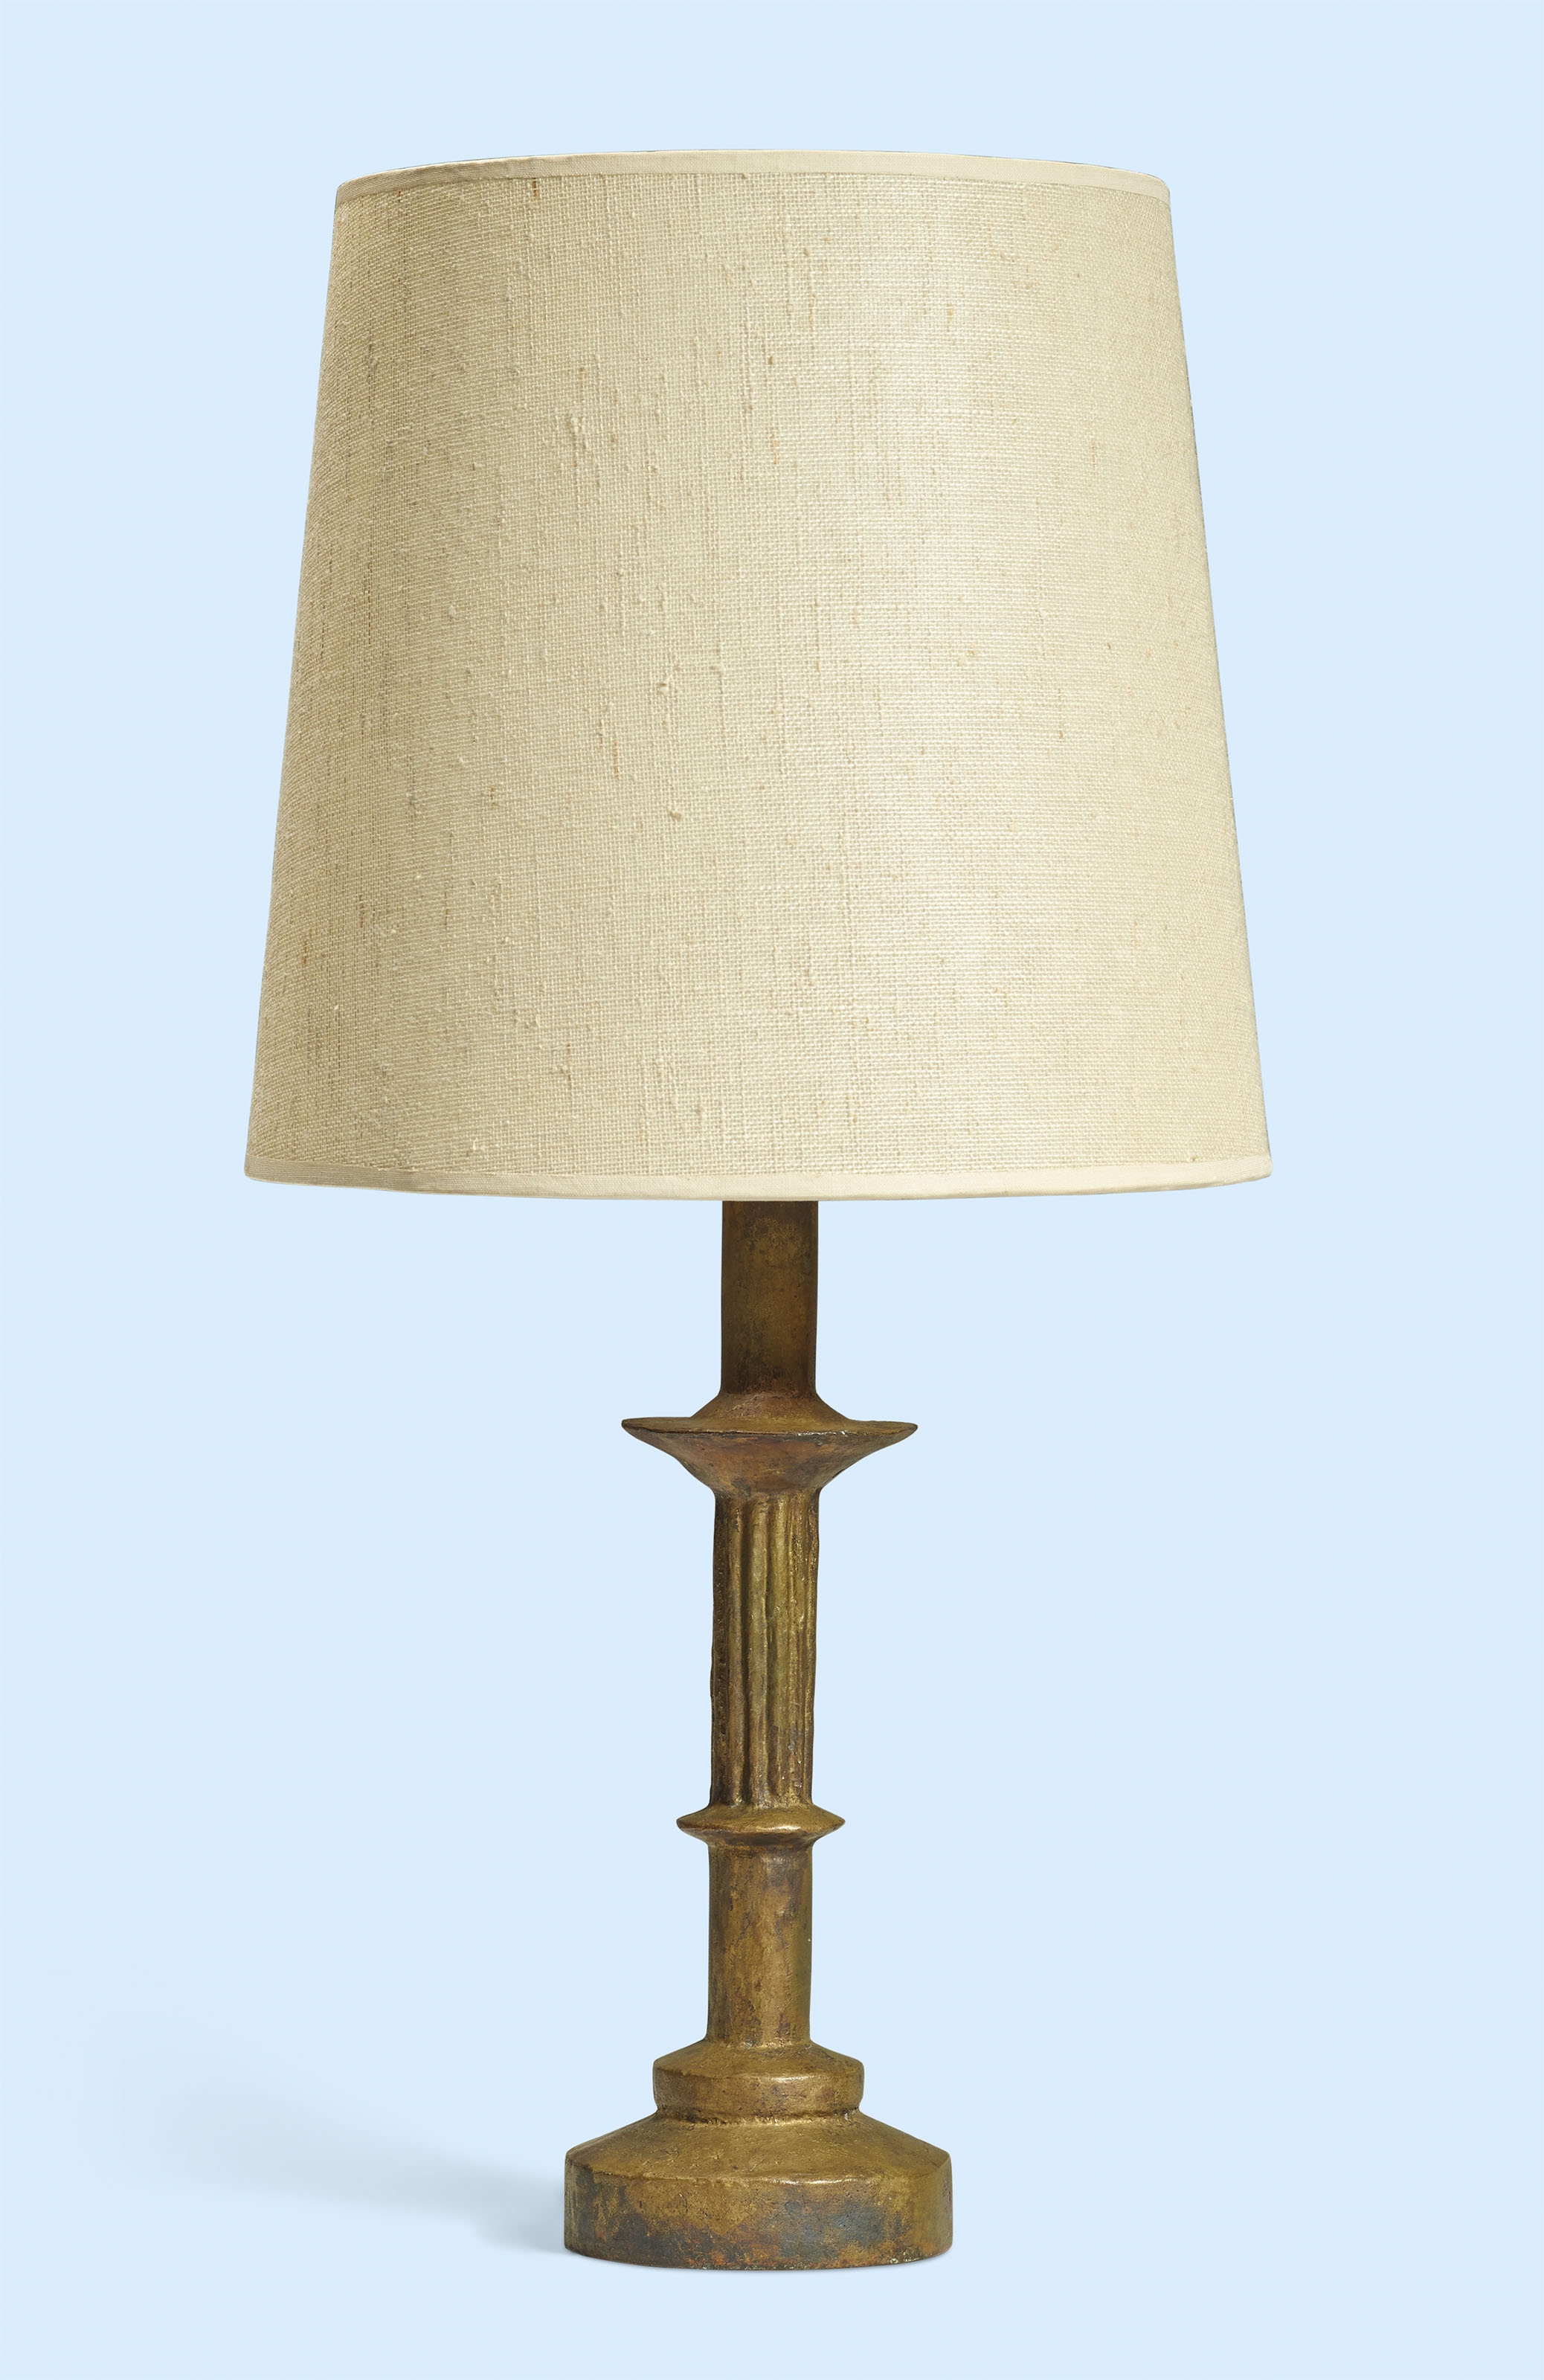 Lampe (Modell Bougeoir) by Alberto Giacometti, circa 1937